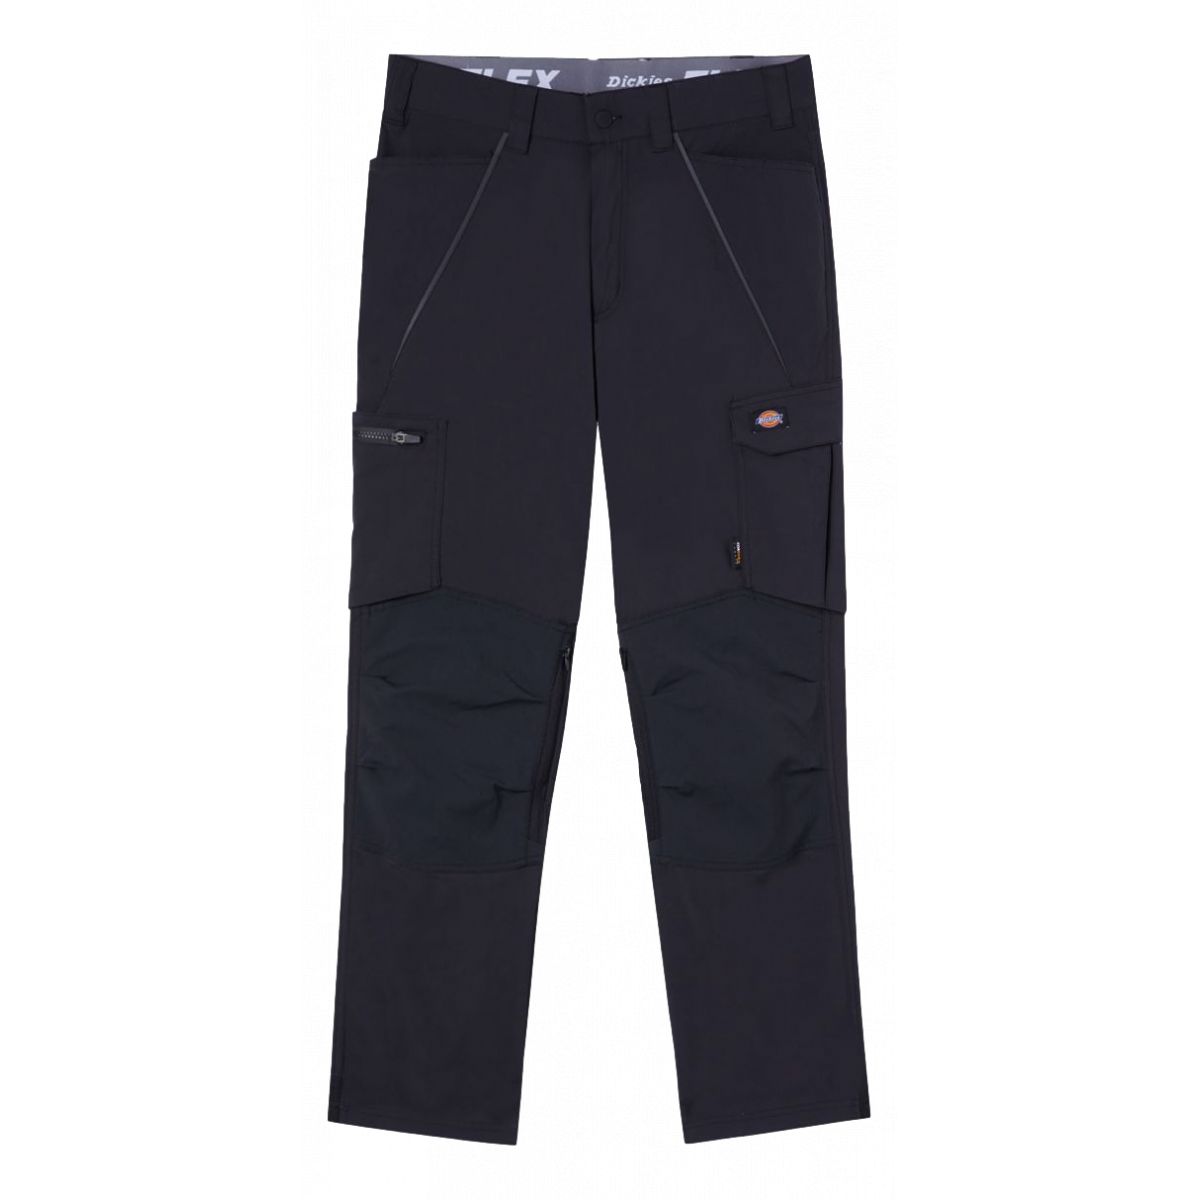 Pantalon léger Flex Noir - Dickies - Taille 48 0